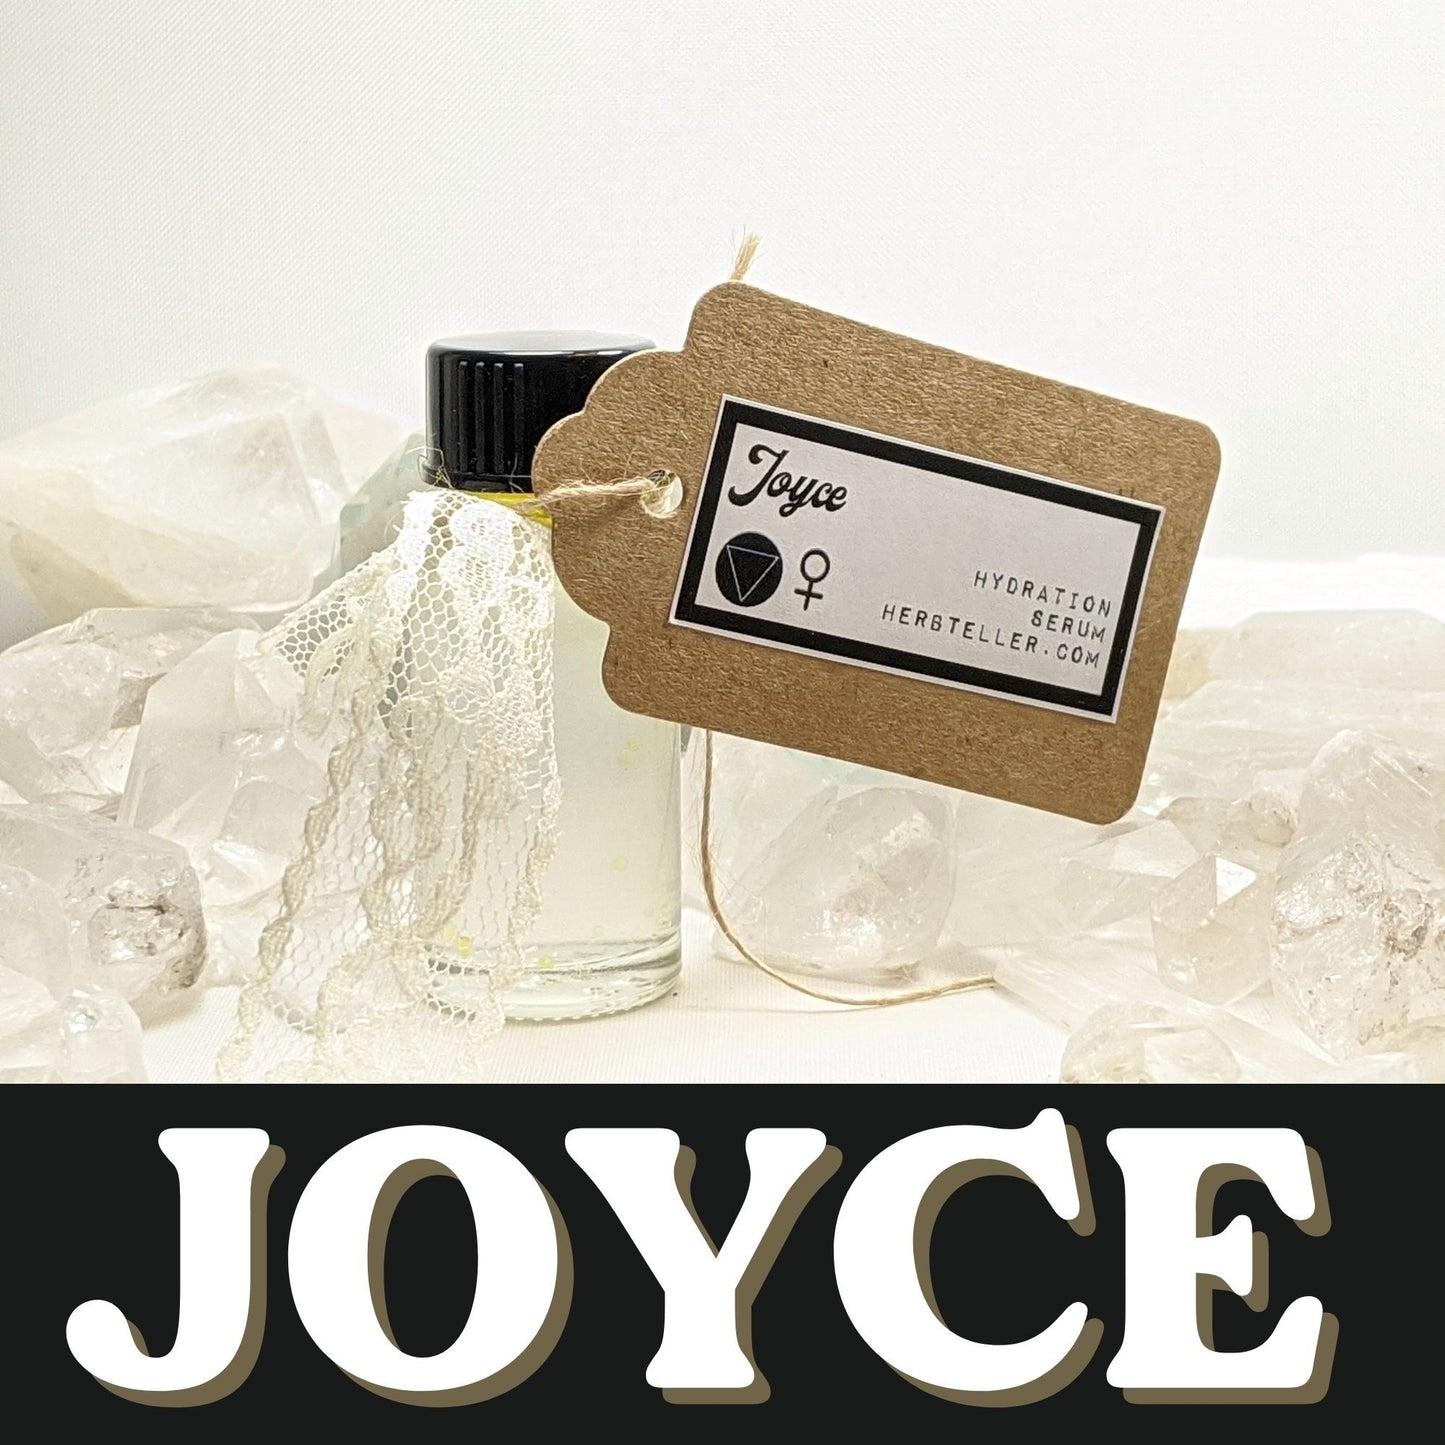 Joyce Beauty Blend (Hydration Serum)